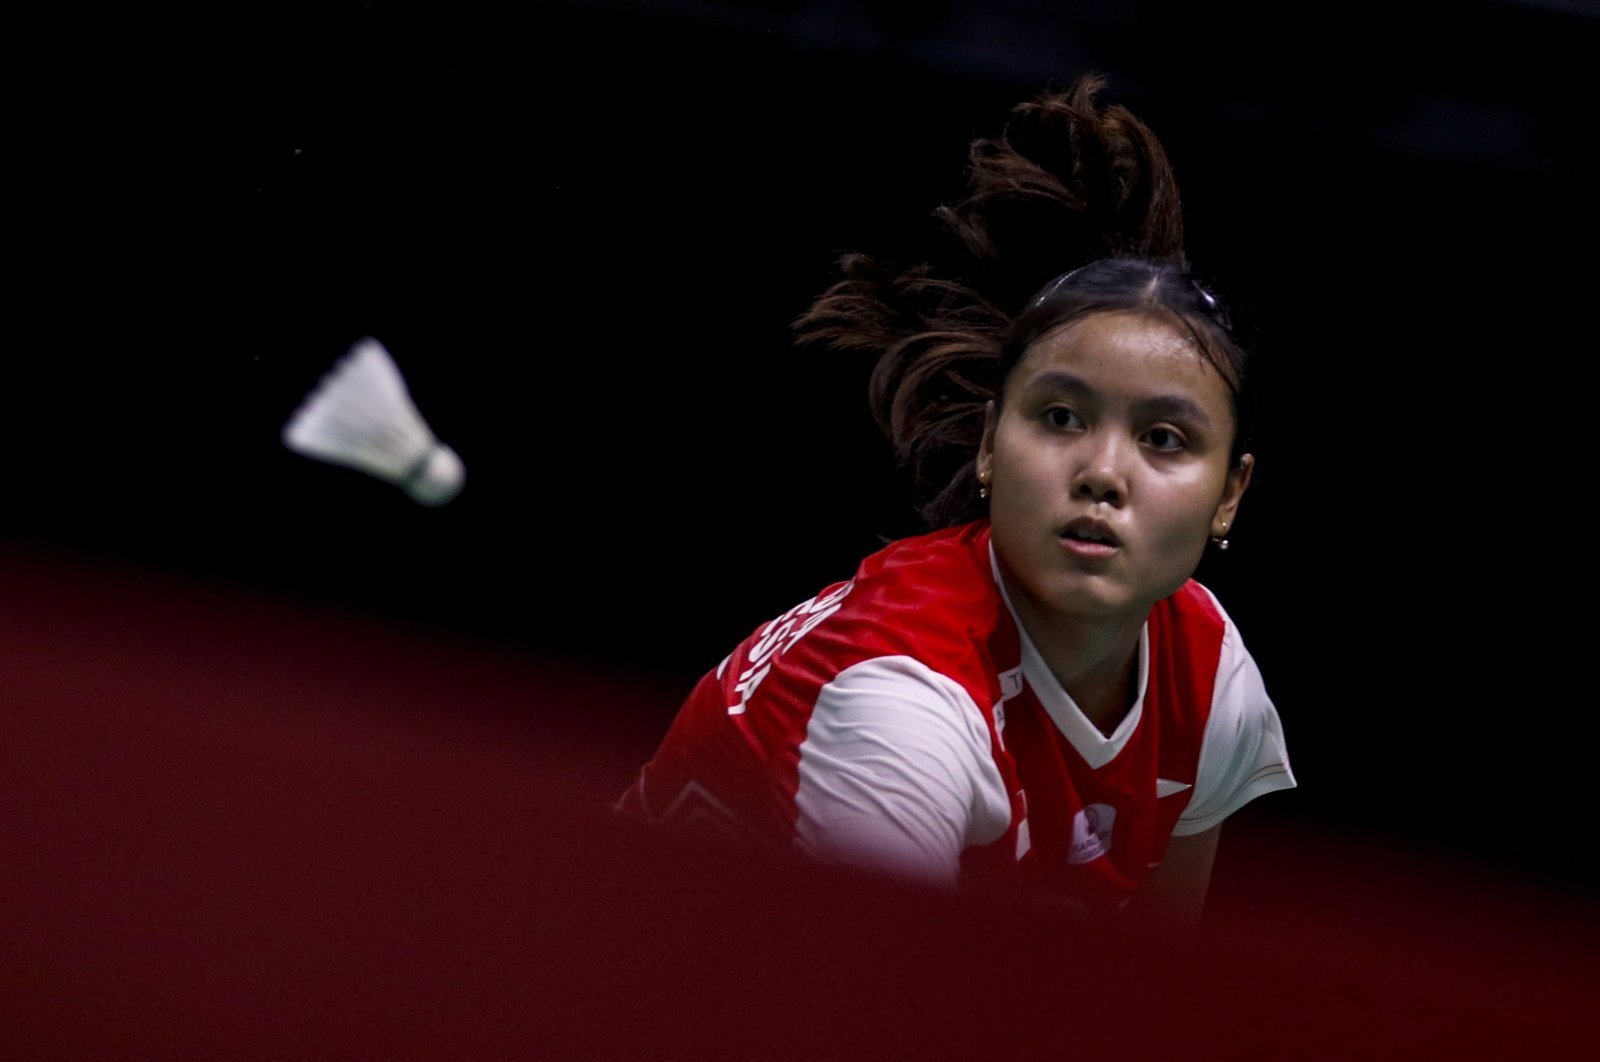 Remaja Indonesia mengejutkan Yamaguchi nomor 1 dunia dalam pertandingan bulu tangkis